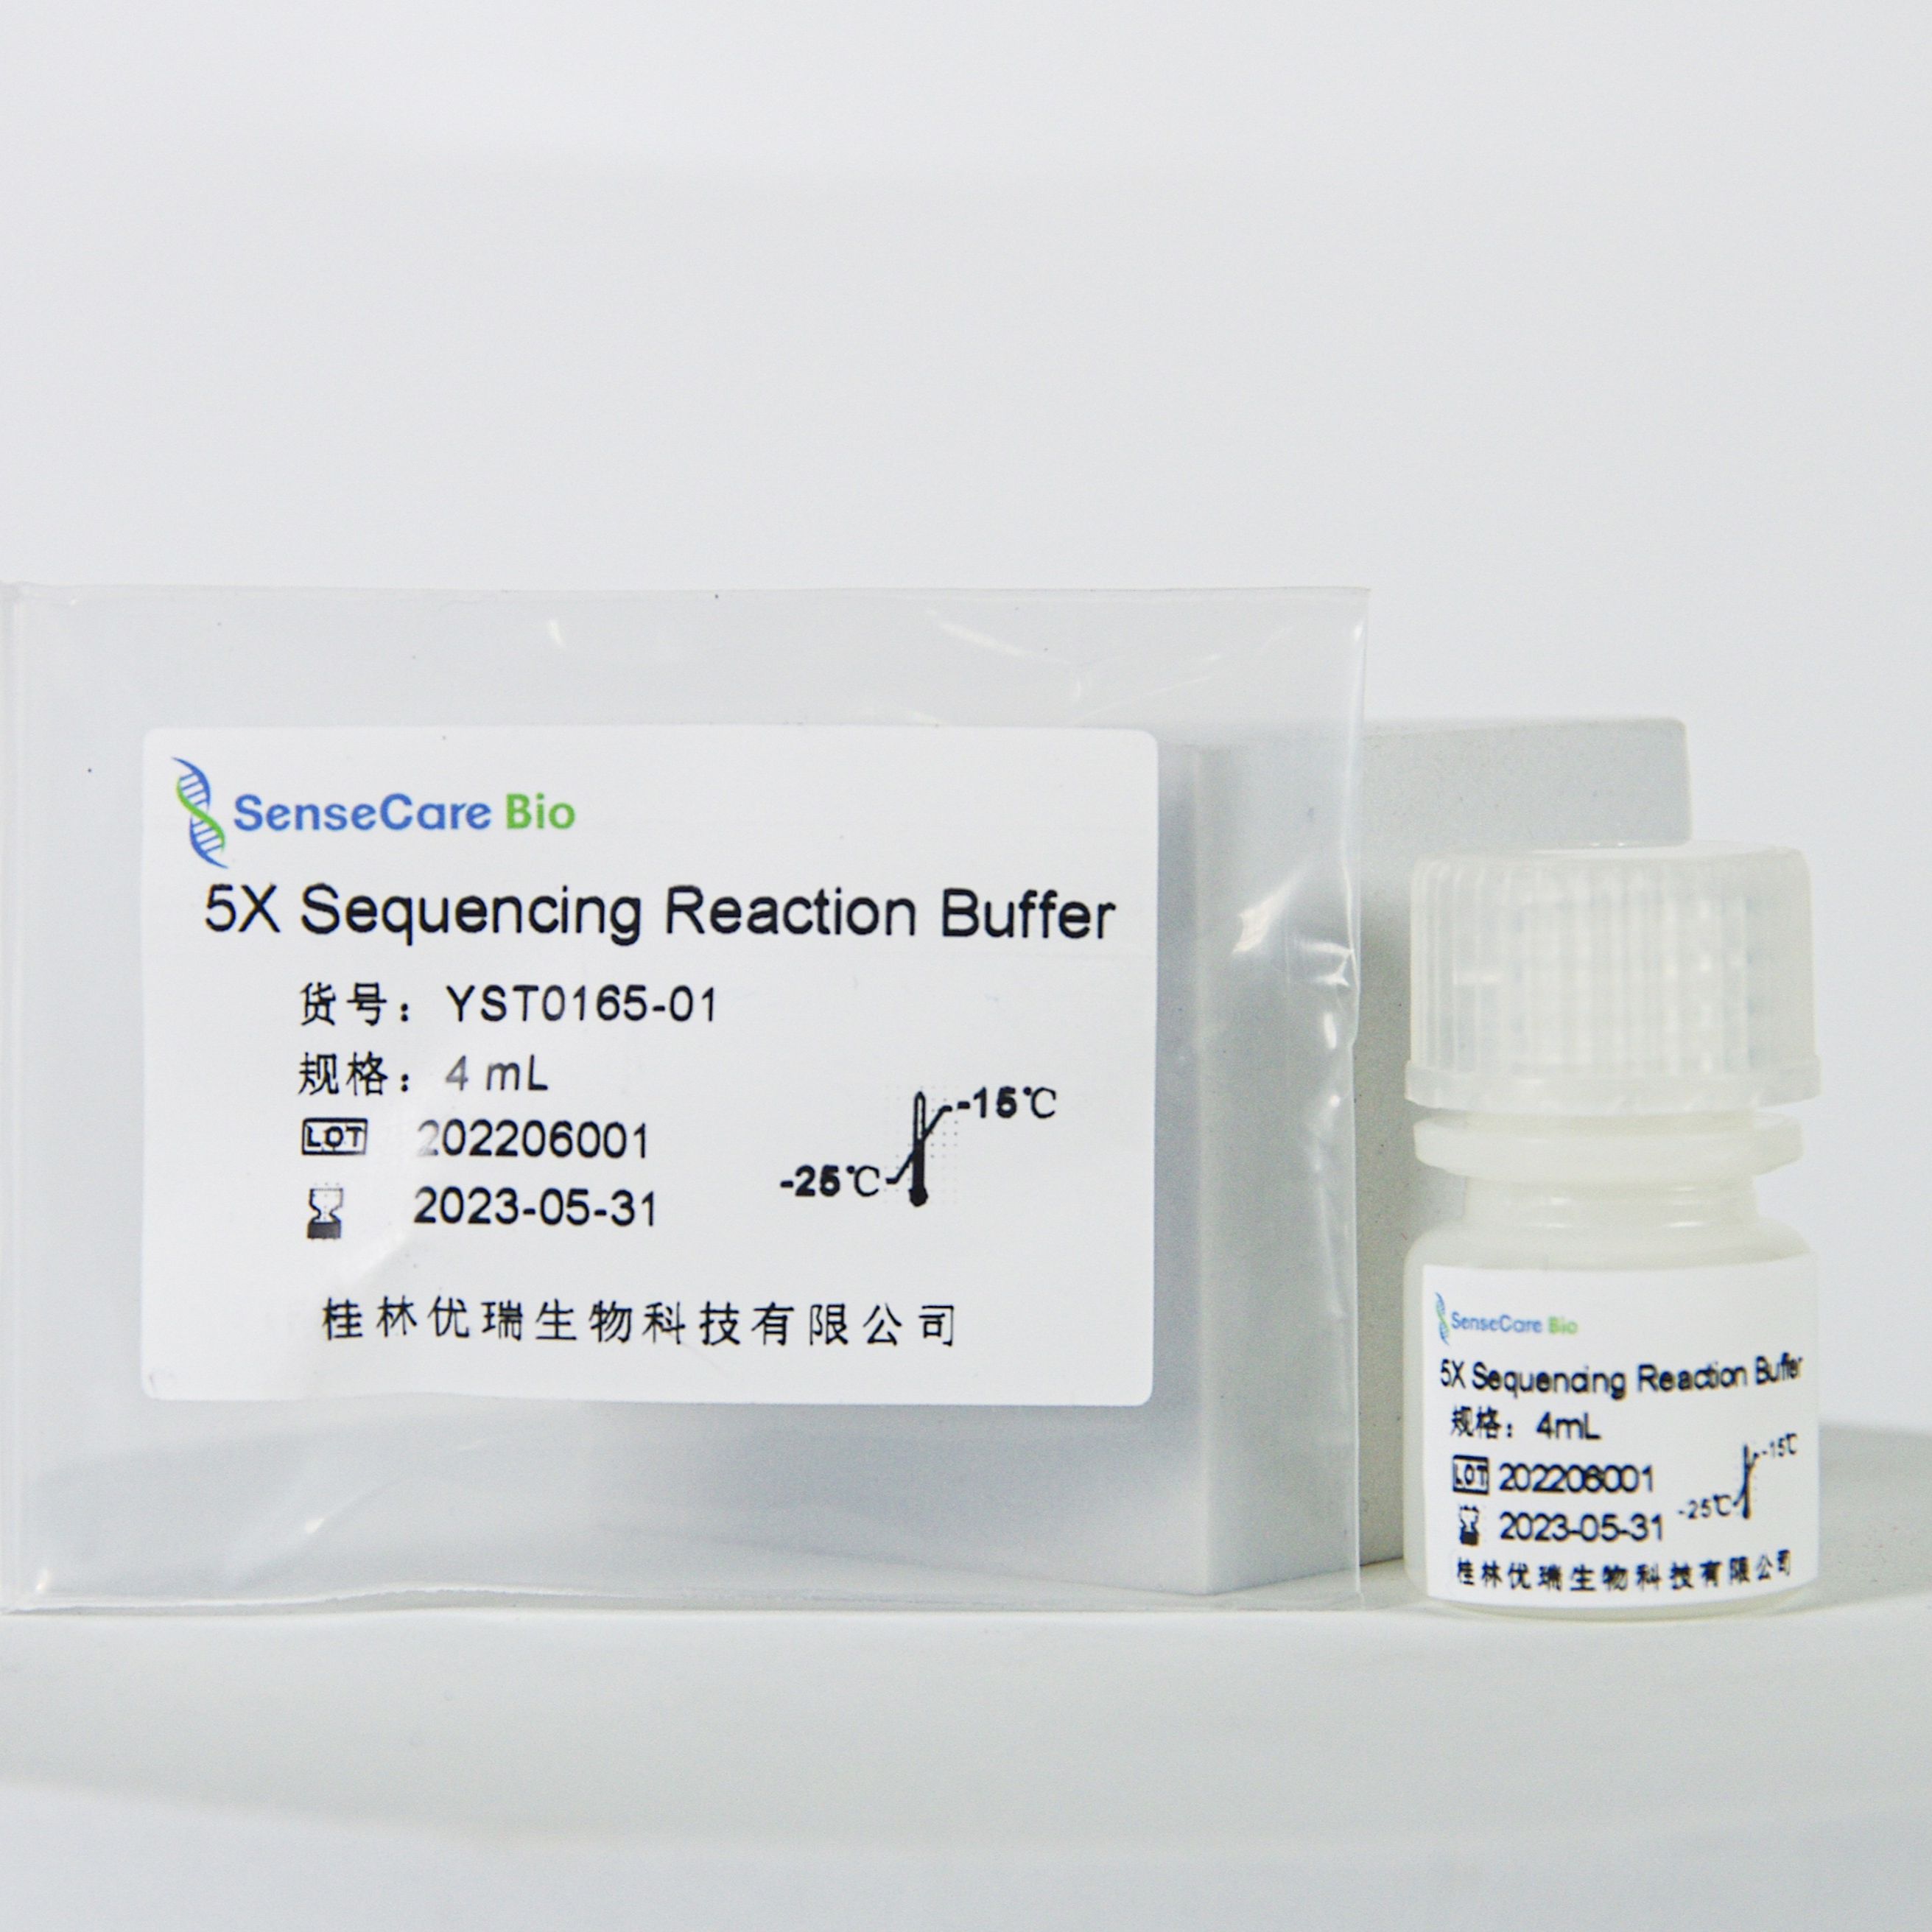 5x Sequencing Reaction Buffer